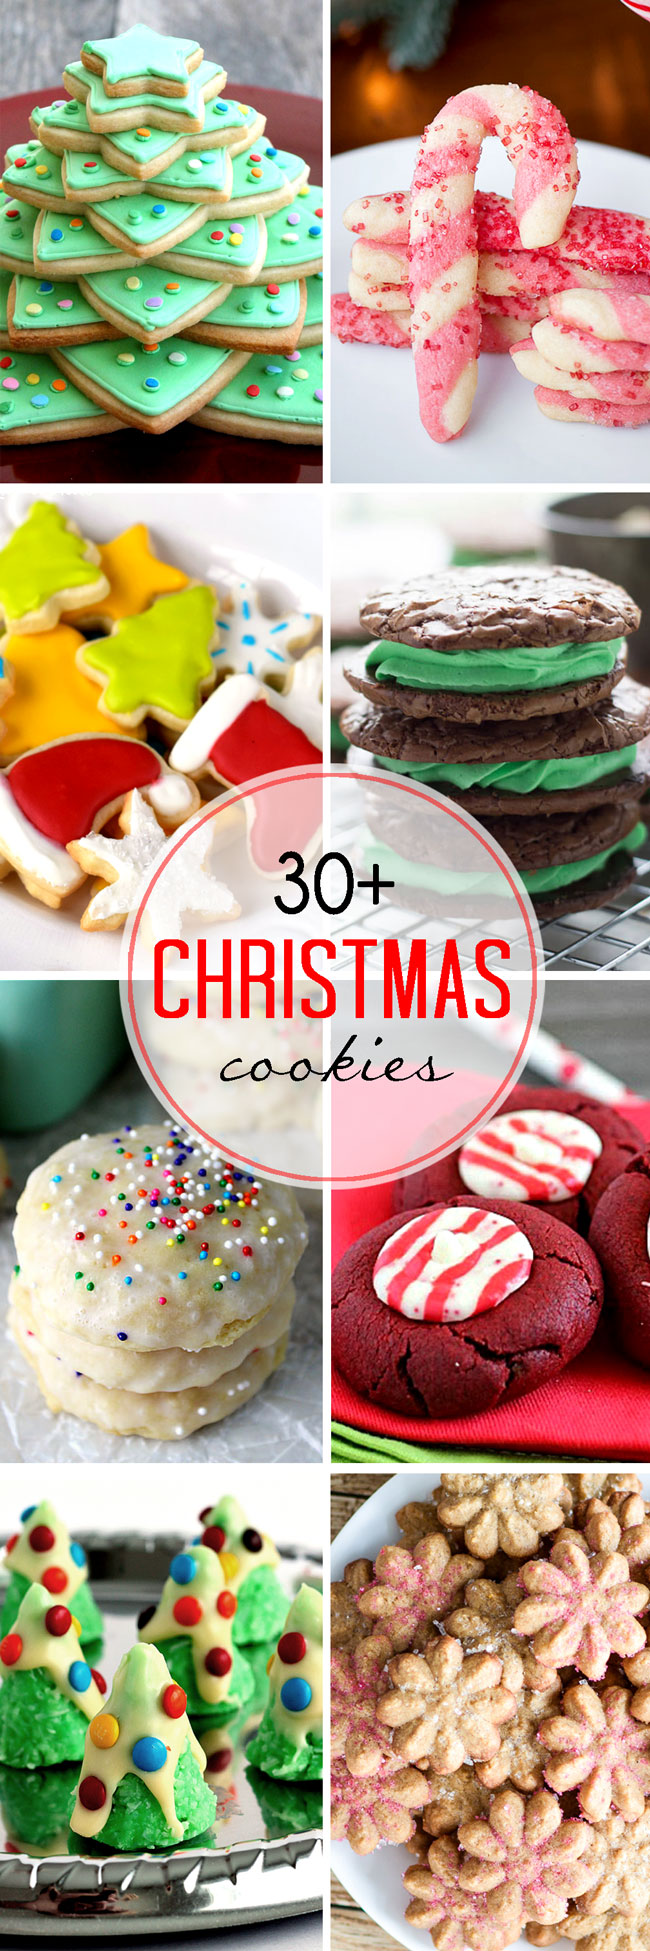 30+ Christmas Cookies